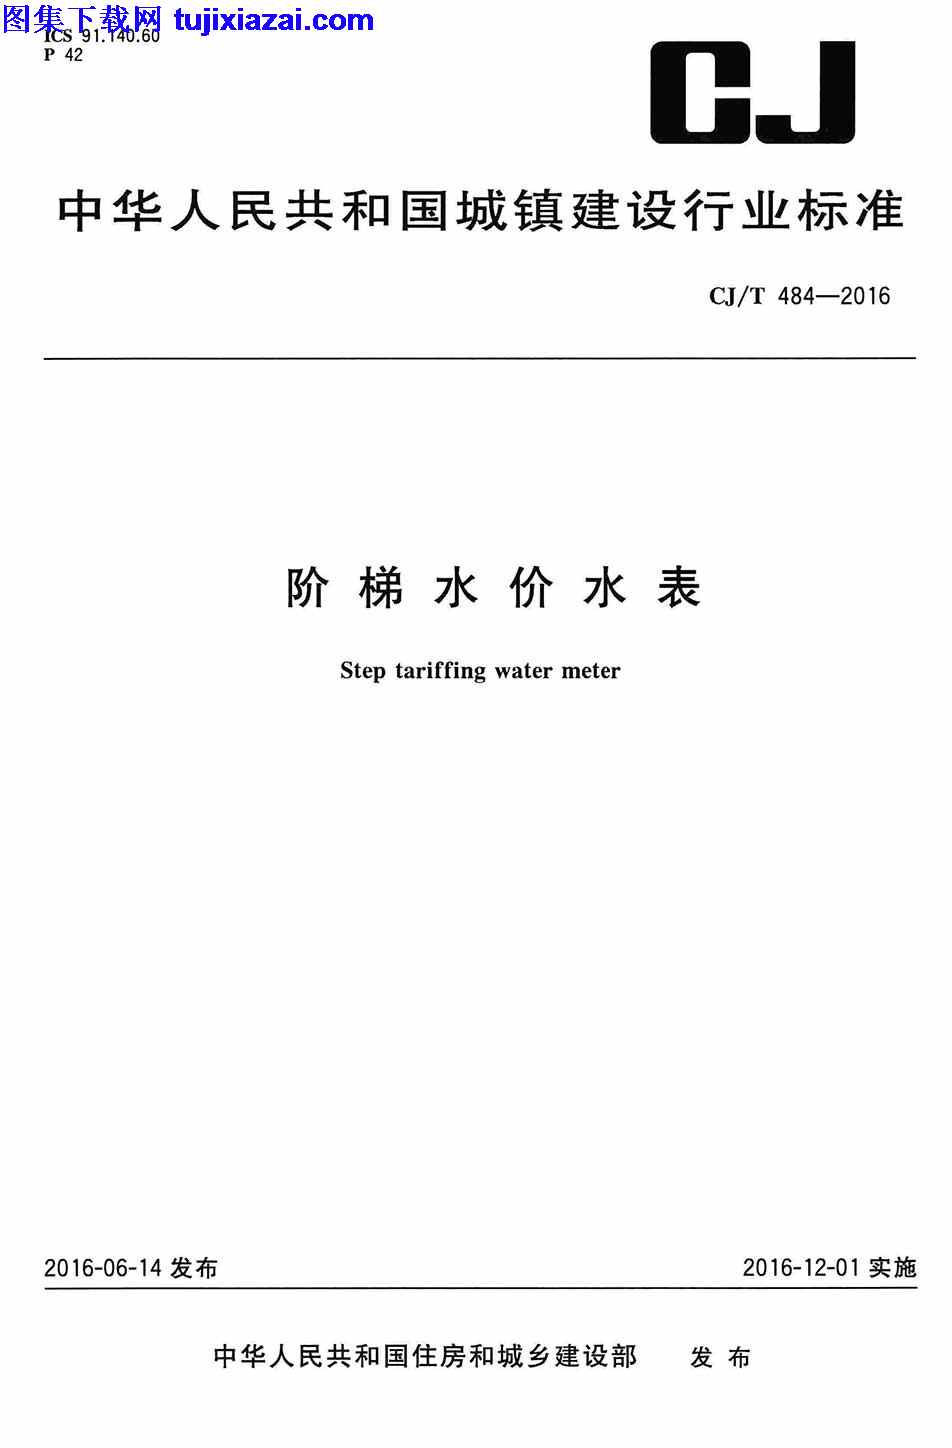 CJT484-2016,市政规范,阶梯水价水表,阶梯水价水表_市政规范,CJT484-2016_阶梯水价水表_市政规范.pdf